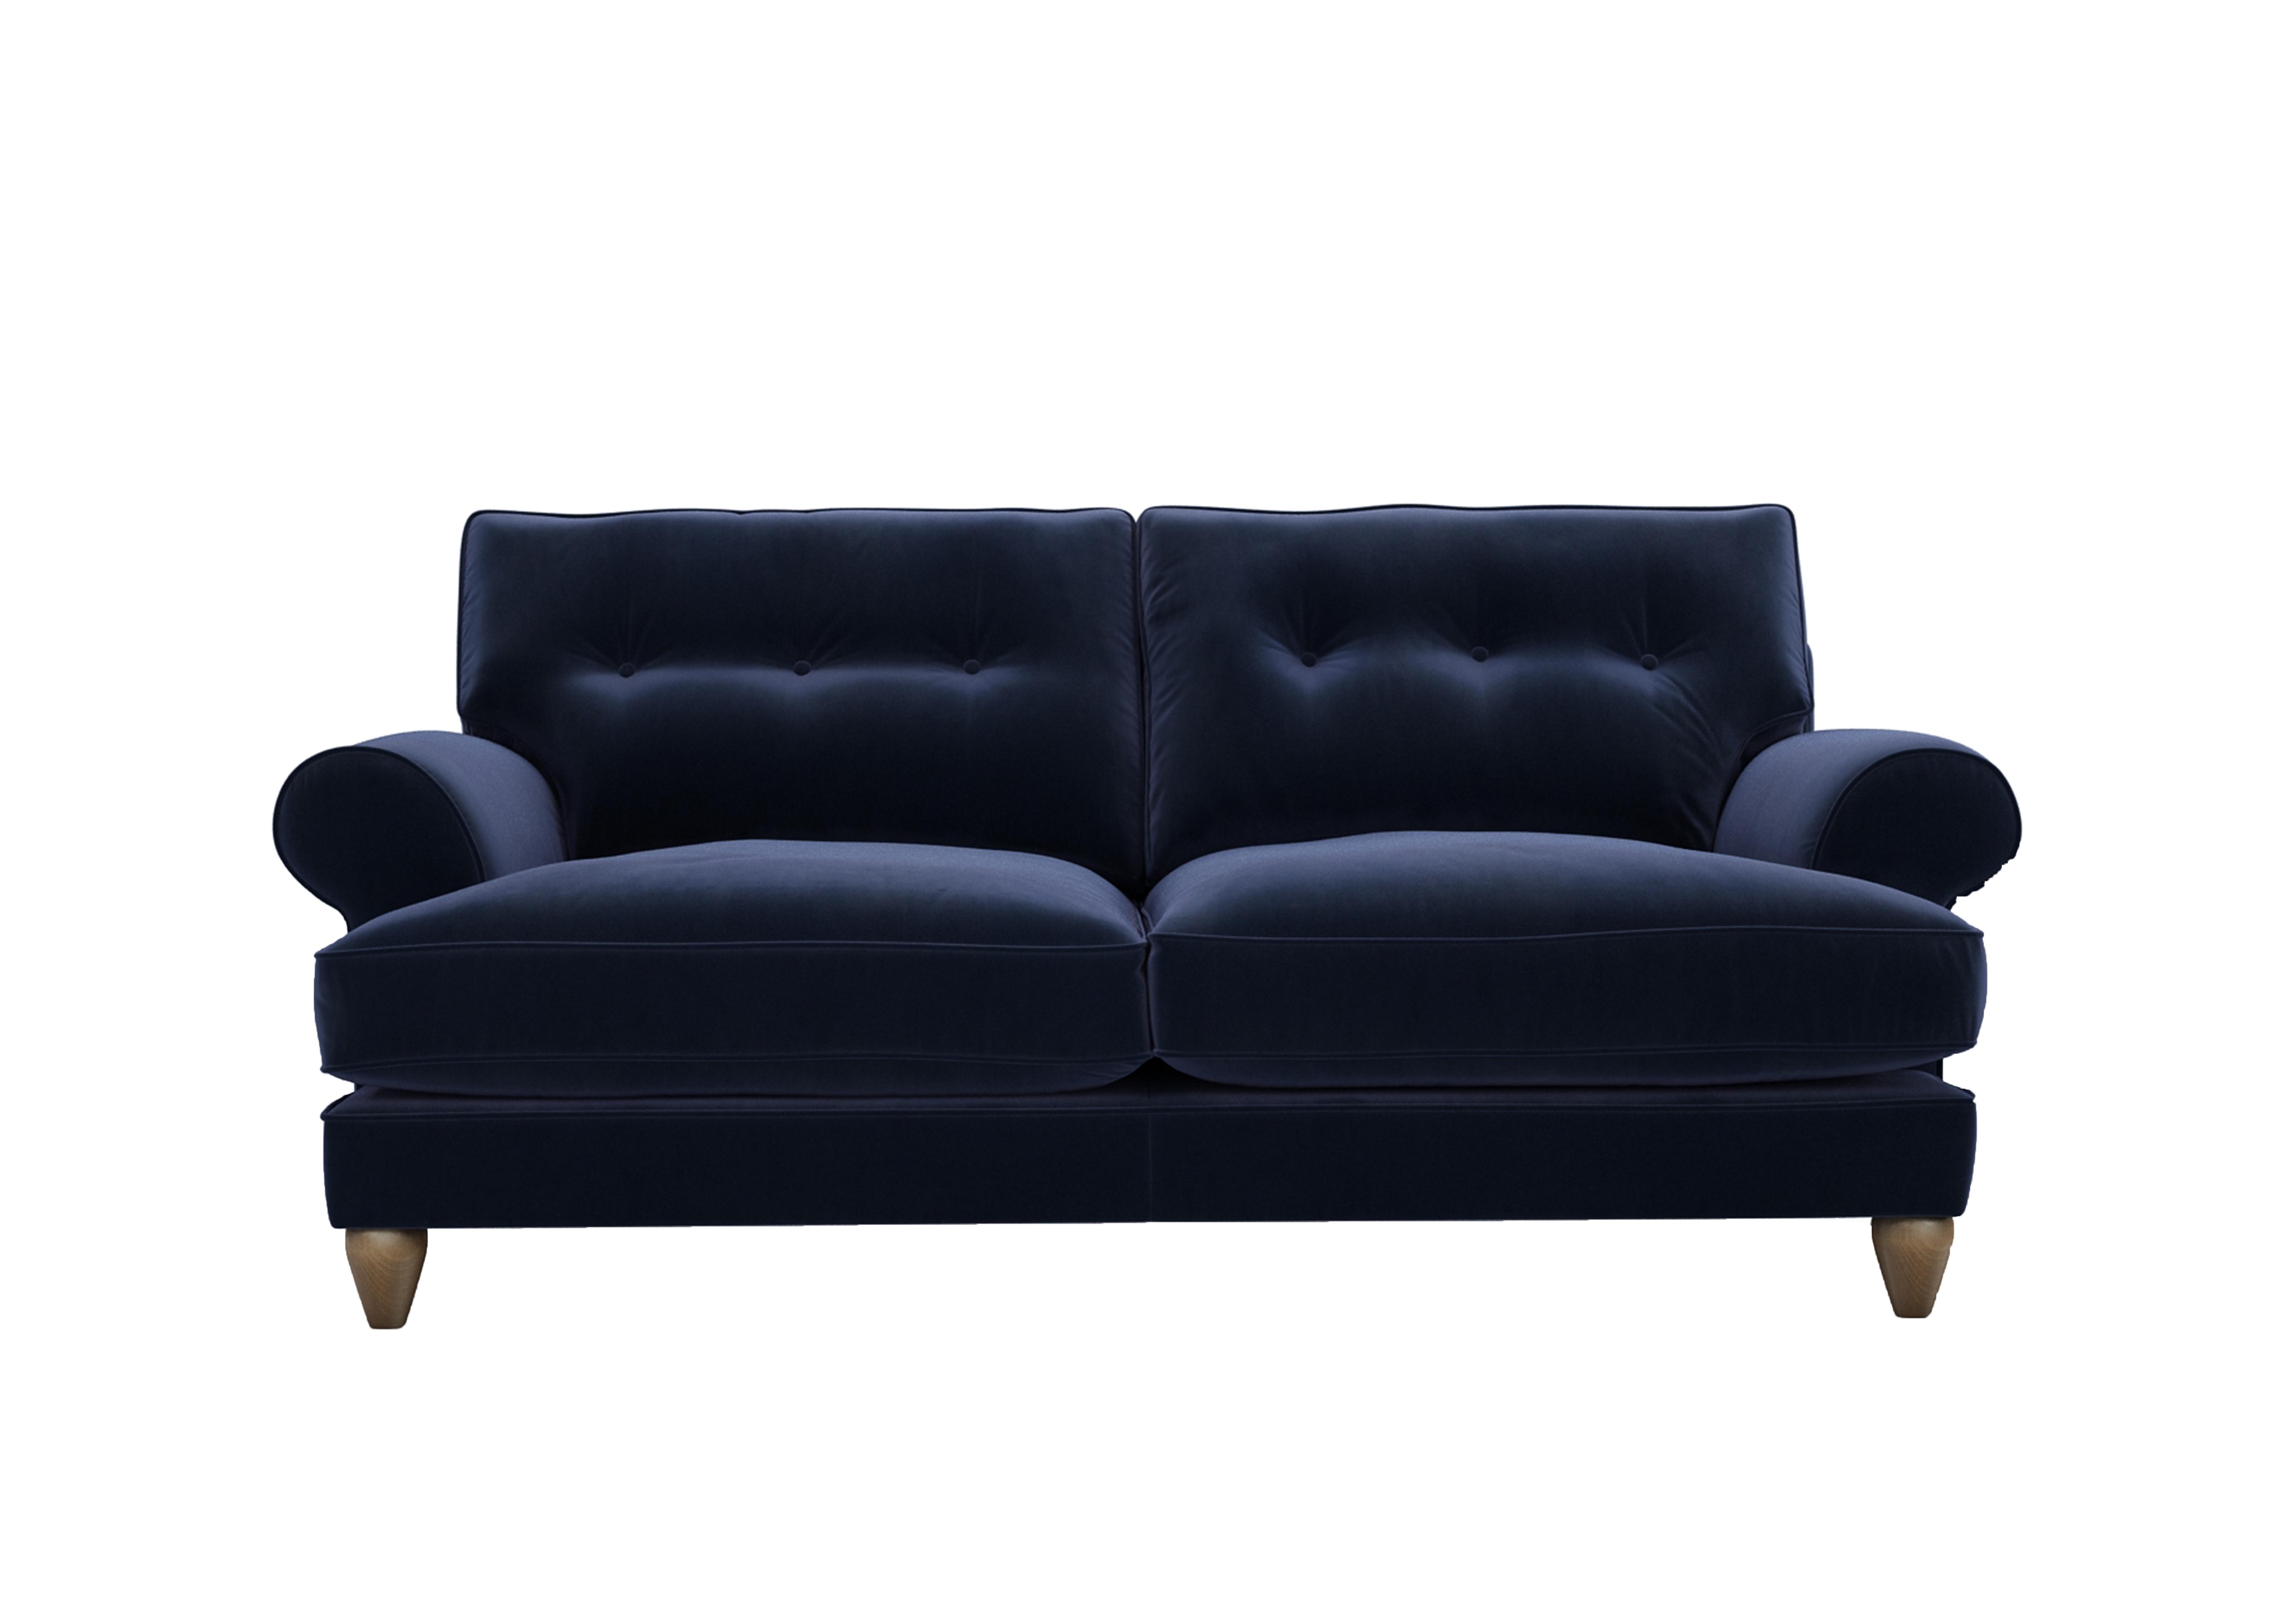 Bronwyn 3 Seater Fabric Classic Back Sofa in Mid009 Midnight Indigo on Furniture Village